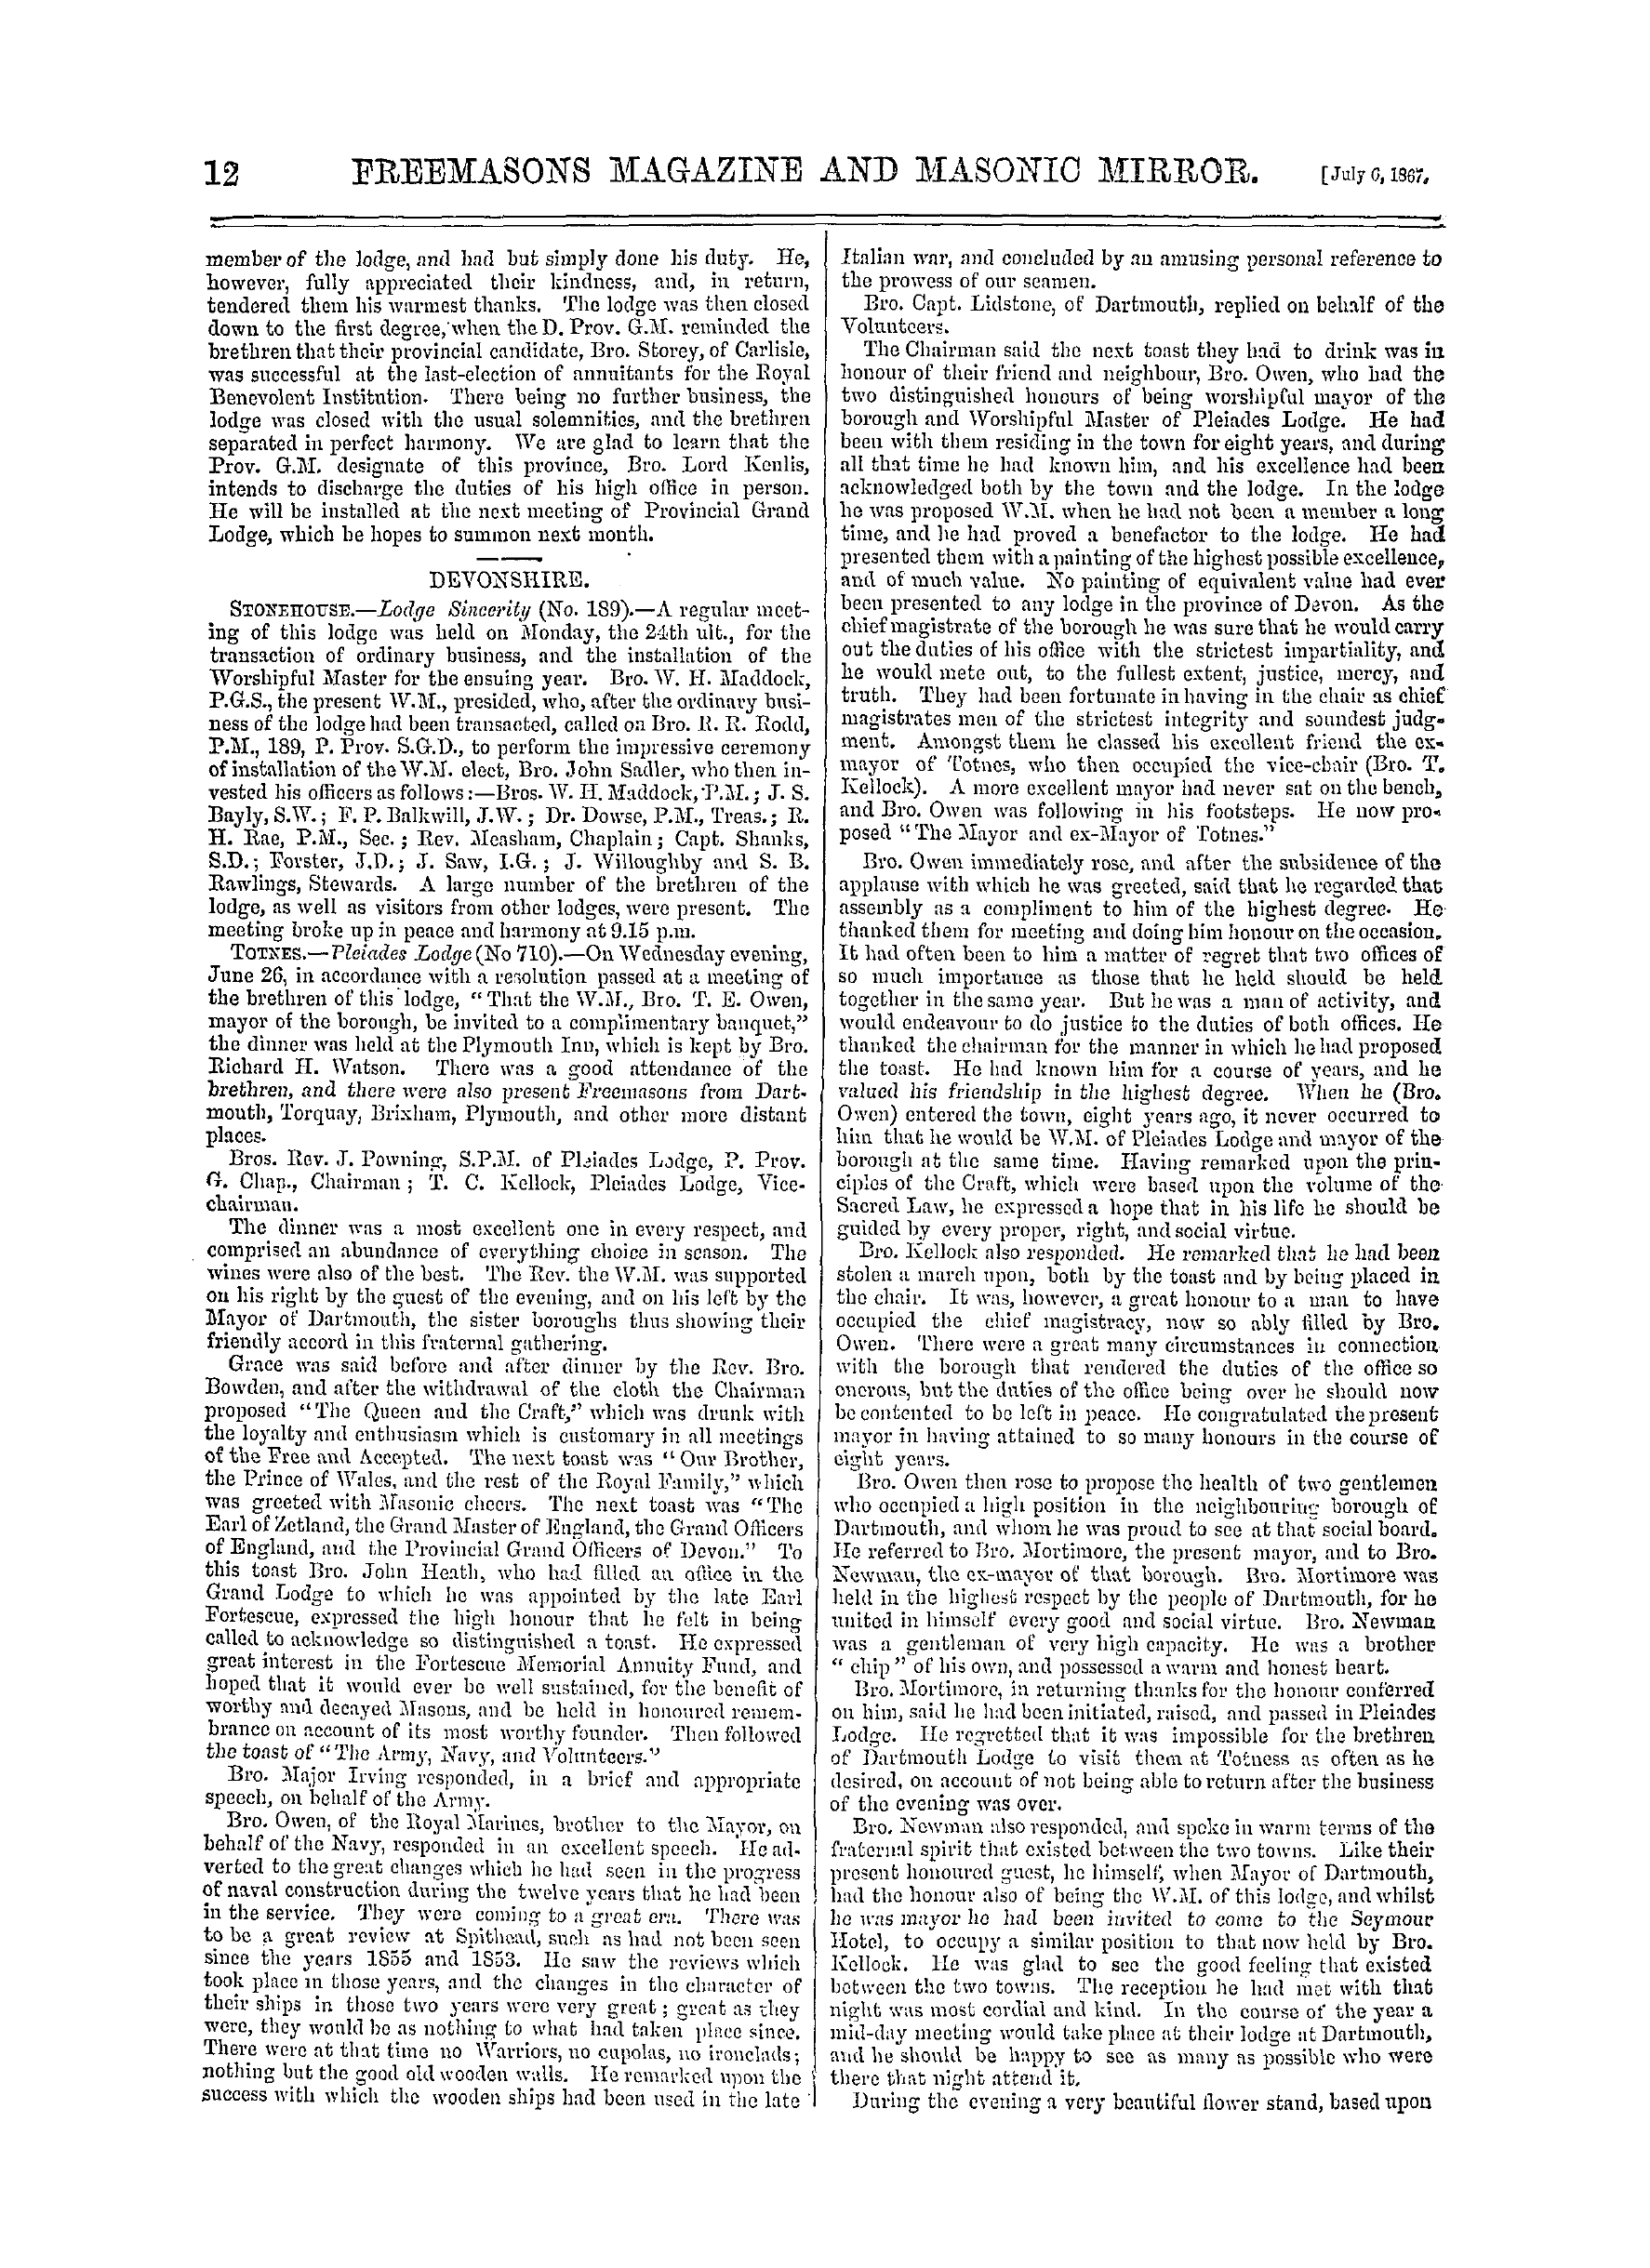 The Freemasons' Monthly Magazine: 1867-07-06 - Provincial.